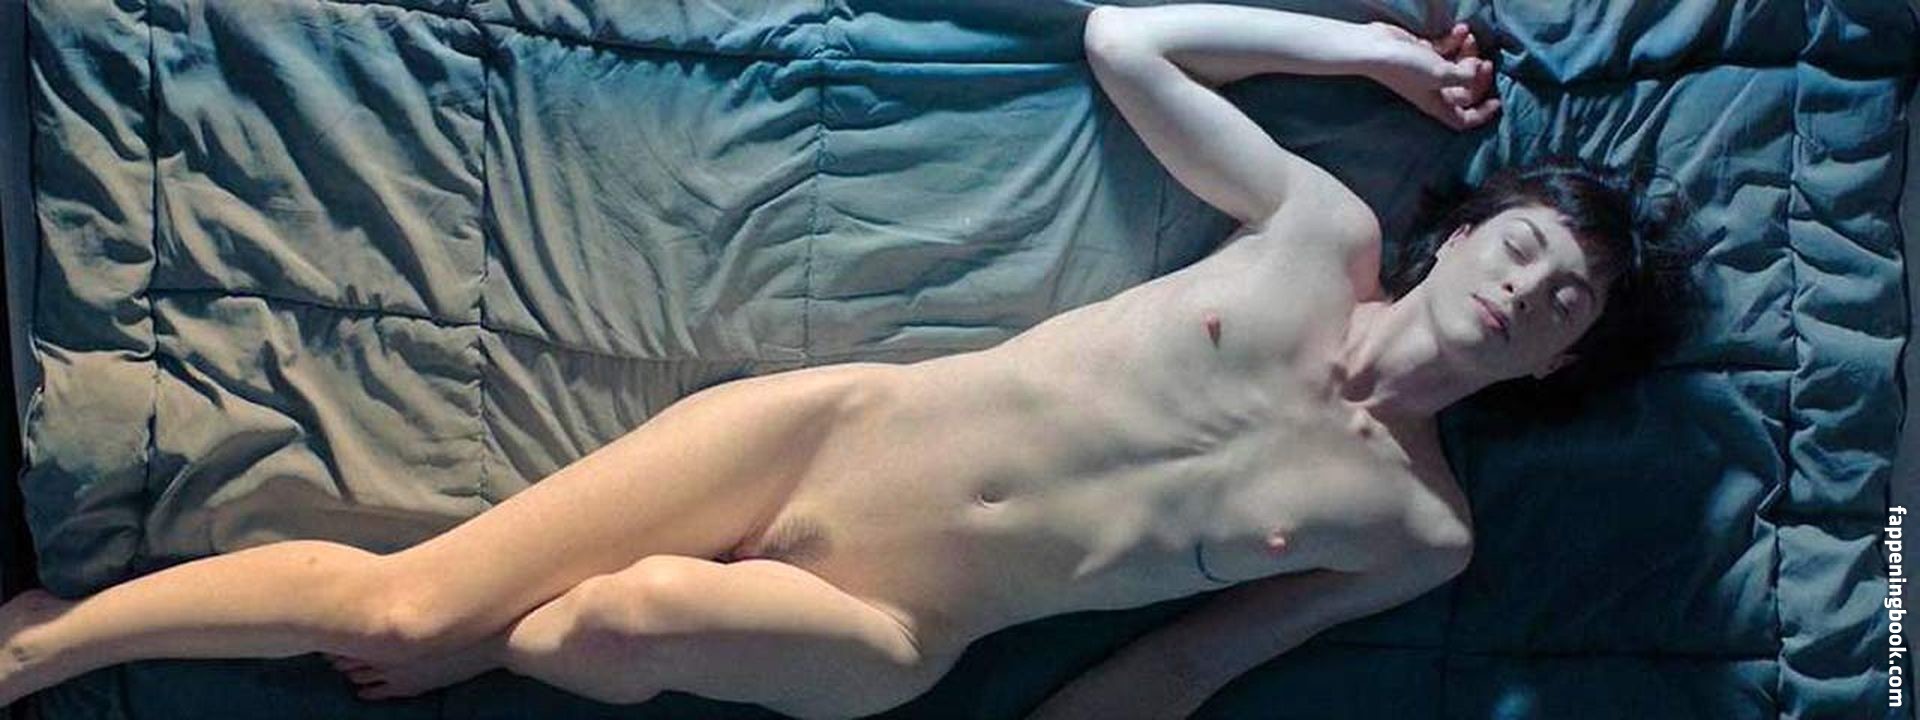 Jessica Stoyadinovich Nude, The Fappening - Photo #922845 - FappeningBook